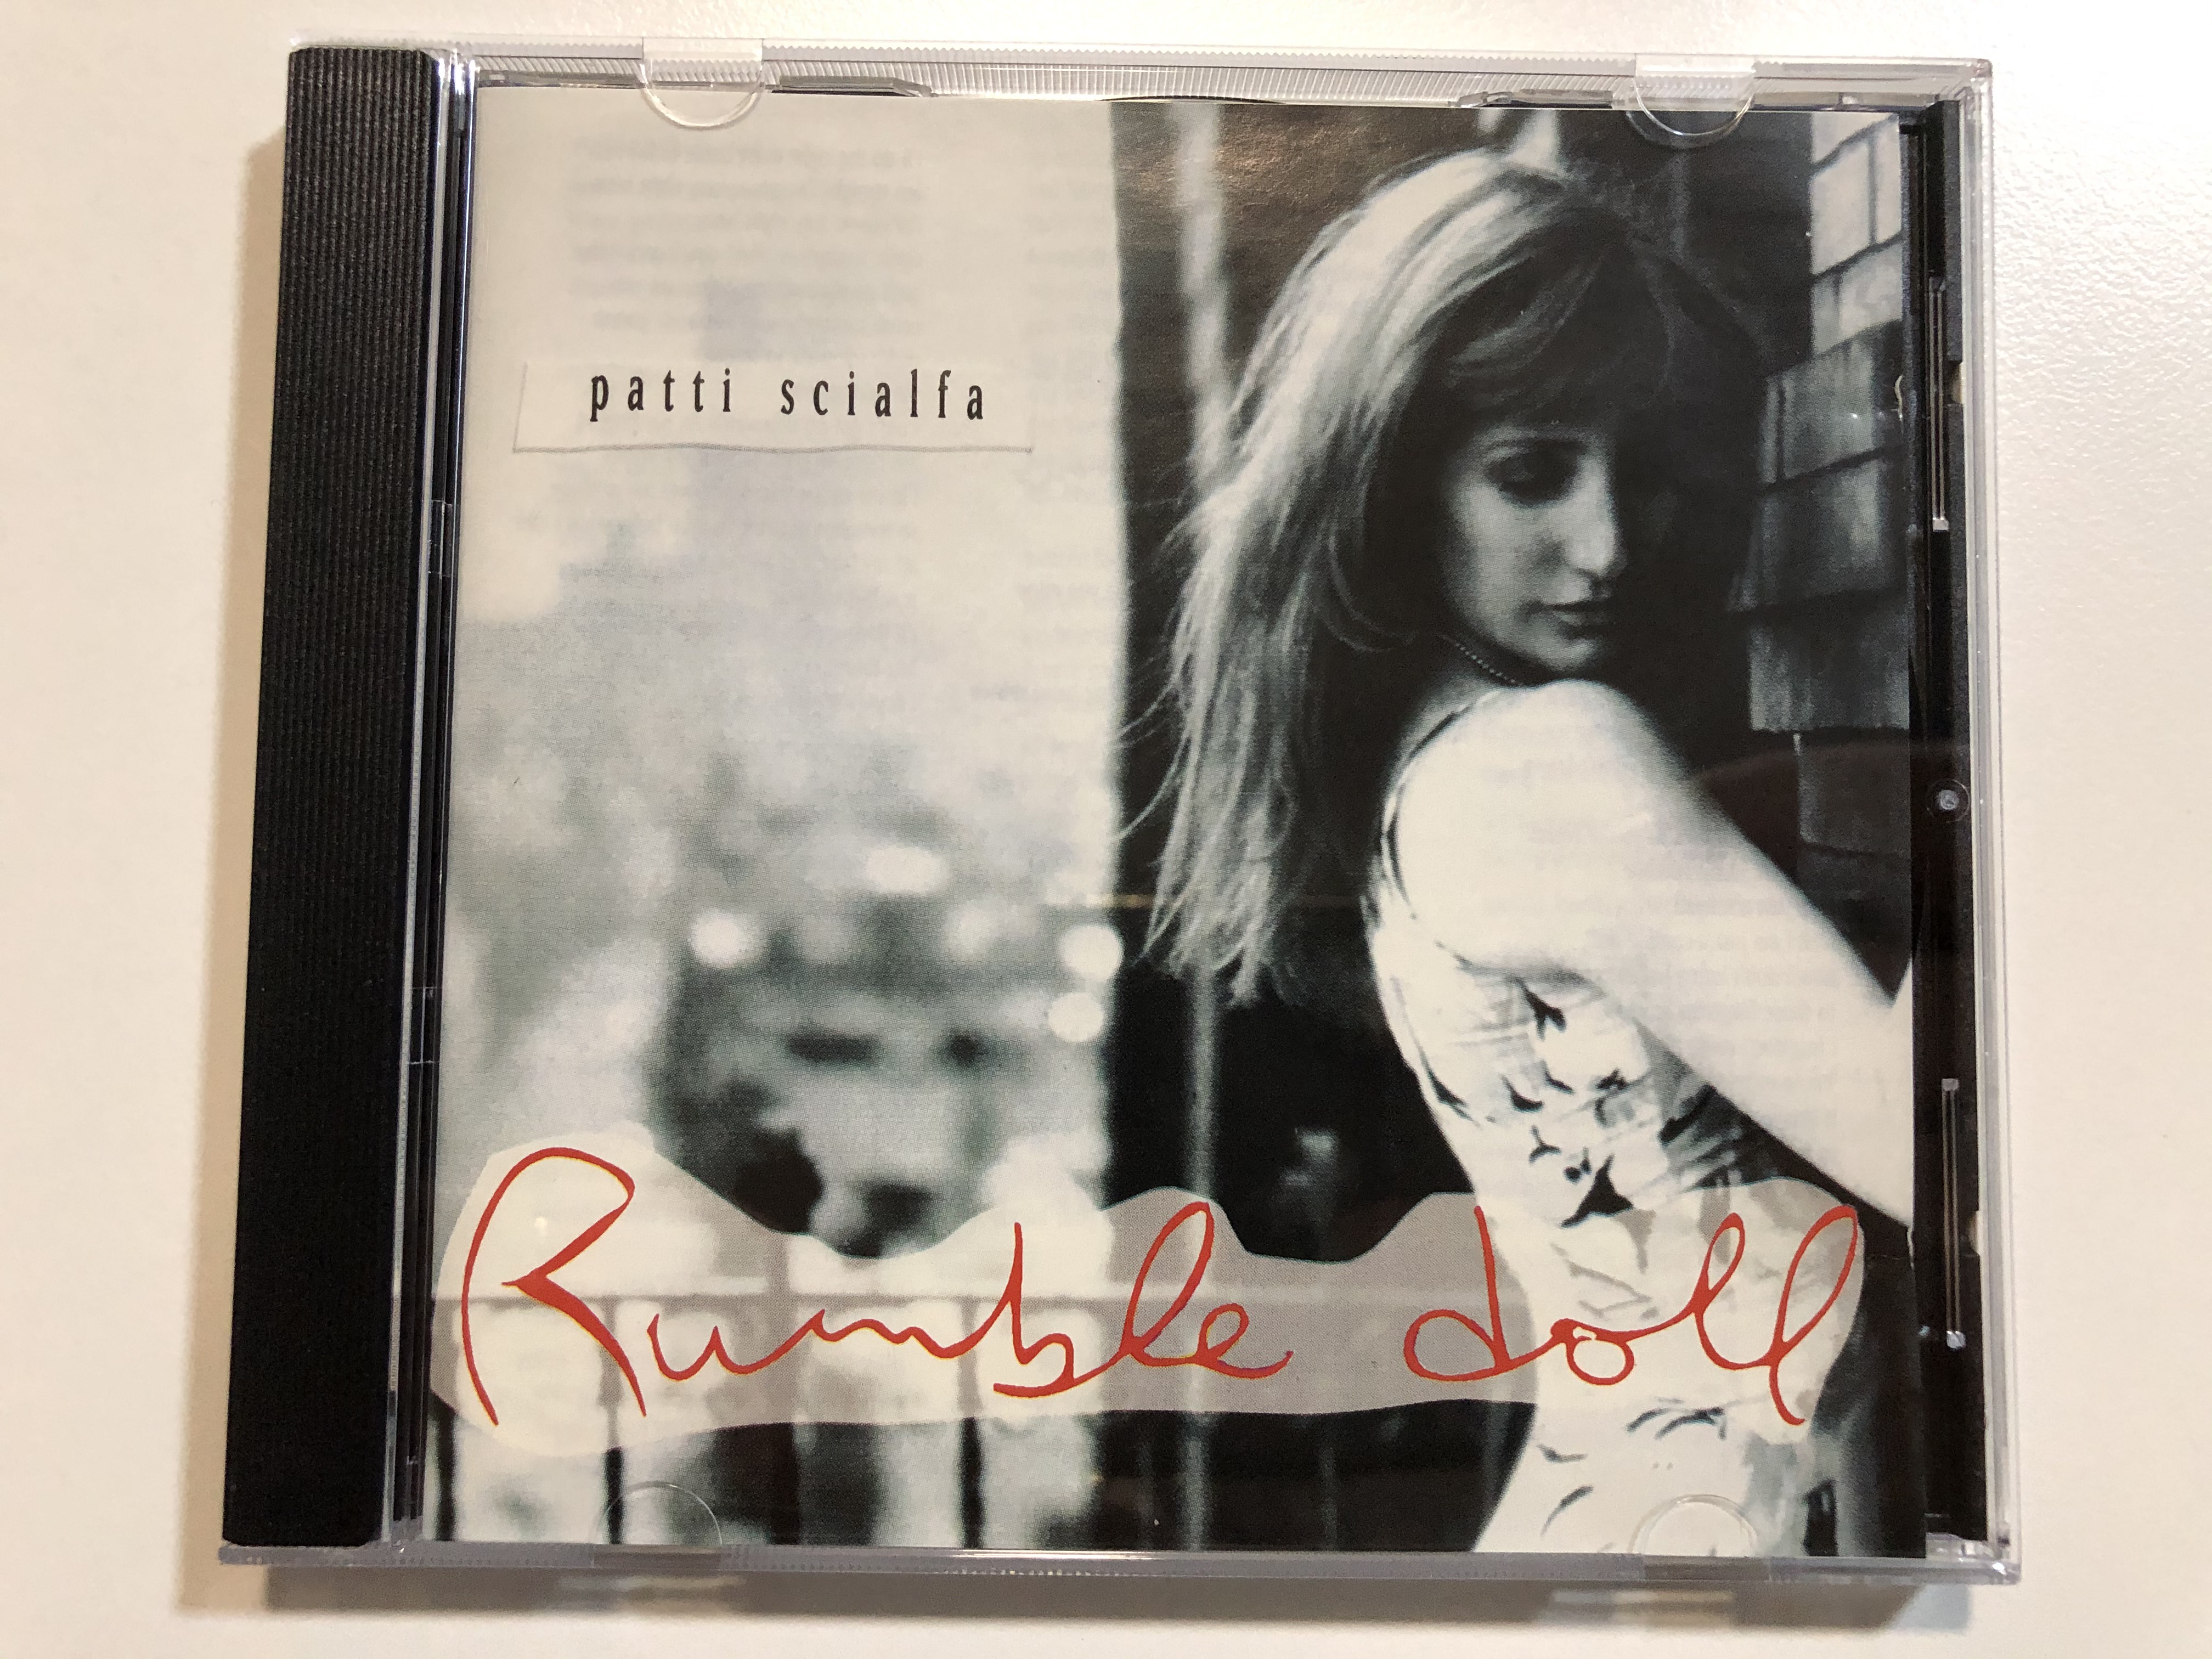 patti-scialfa-rumble-doll-columbia-audio-cd-1993-473874-2-1-.jpg